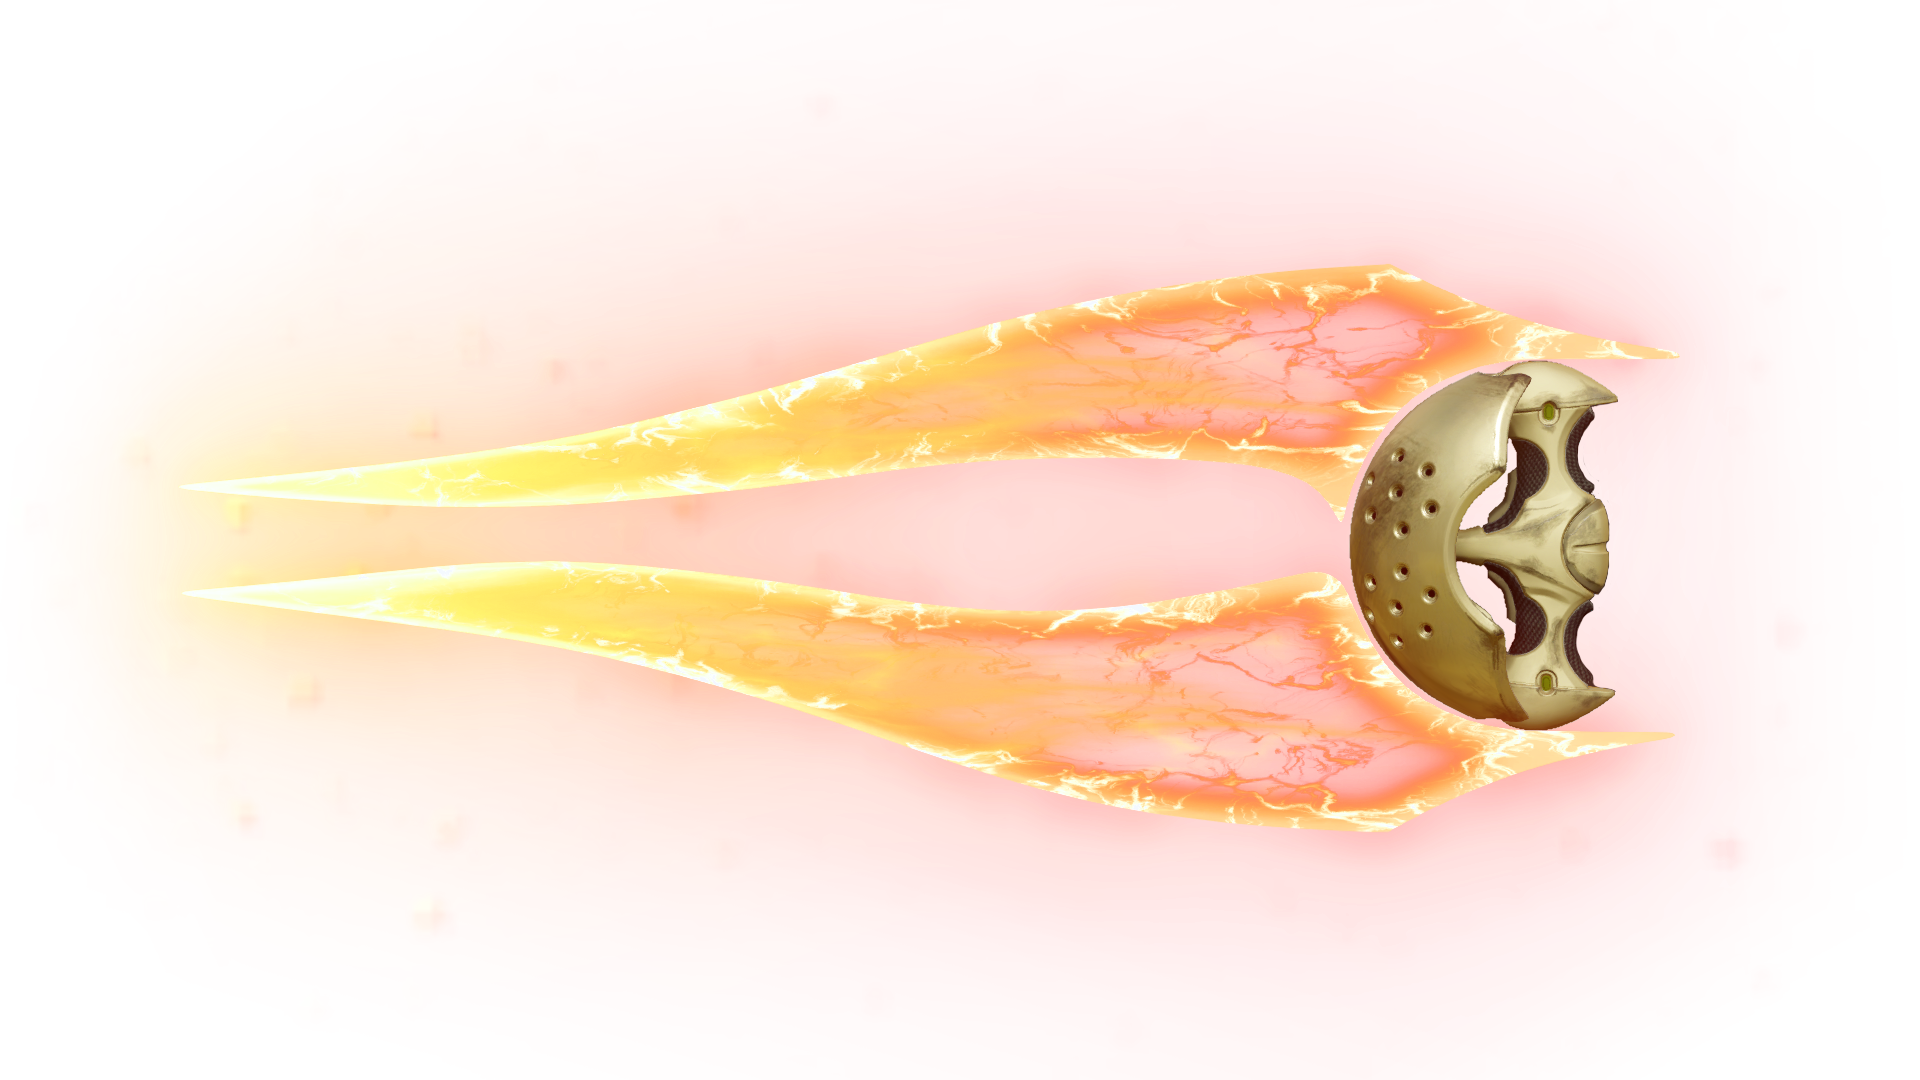 The Arbiter's energy sword, the Prophet's Bane